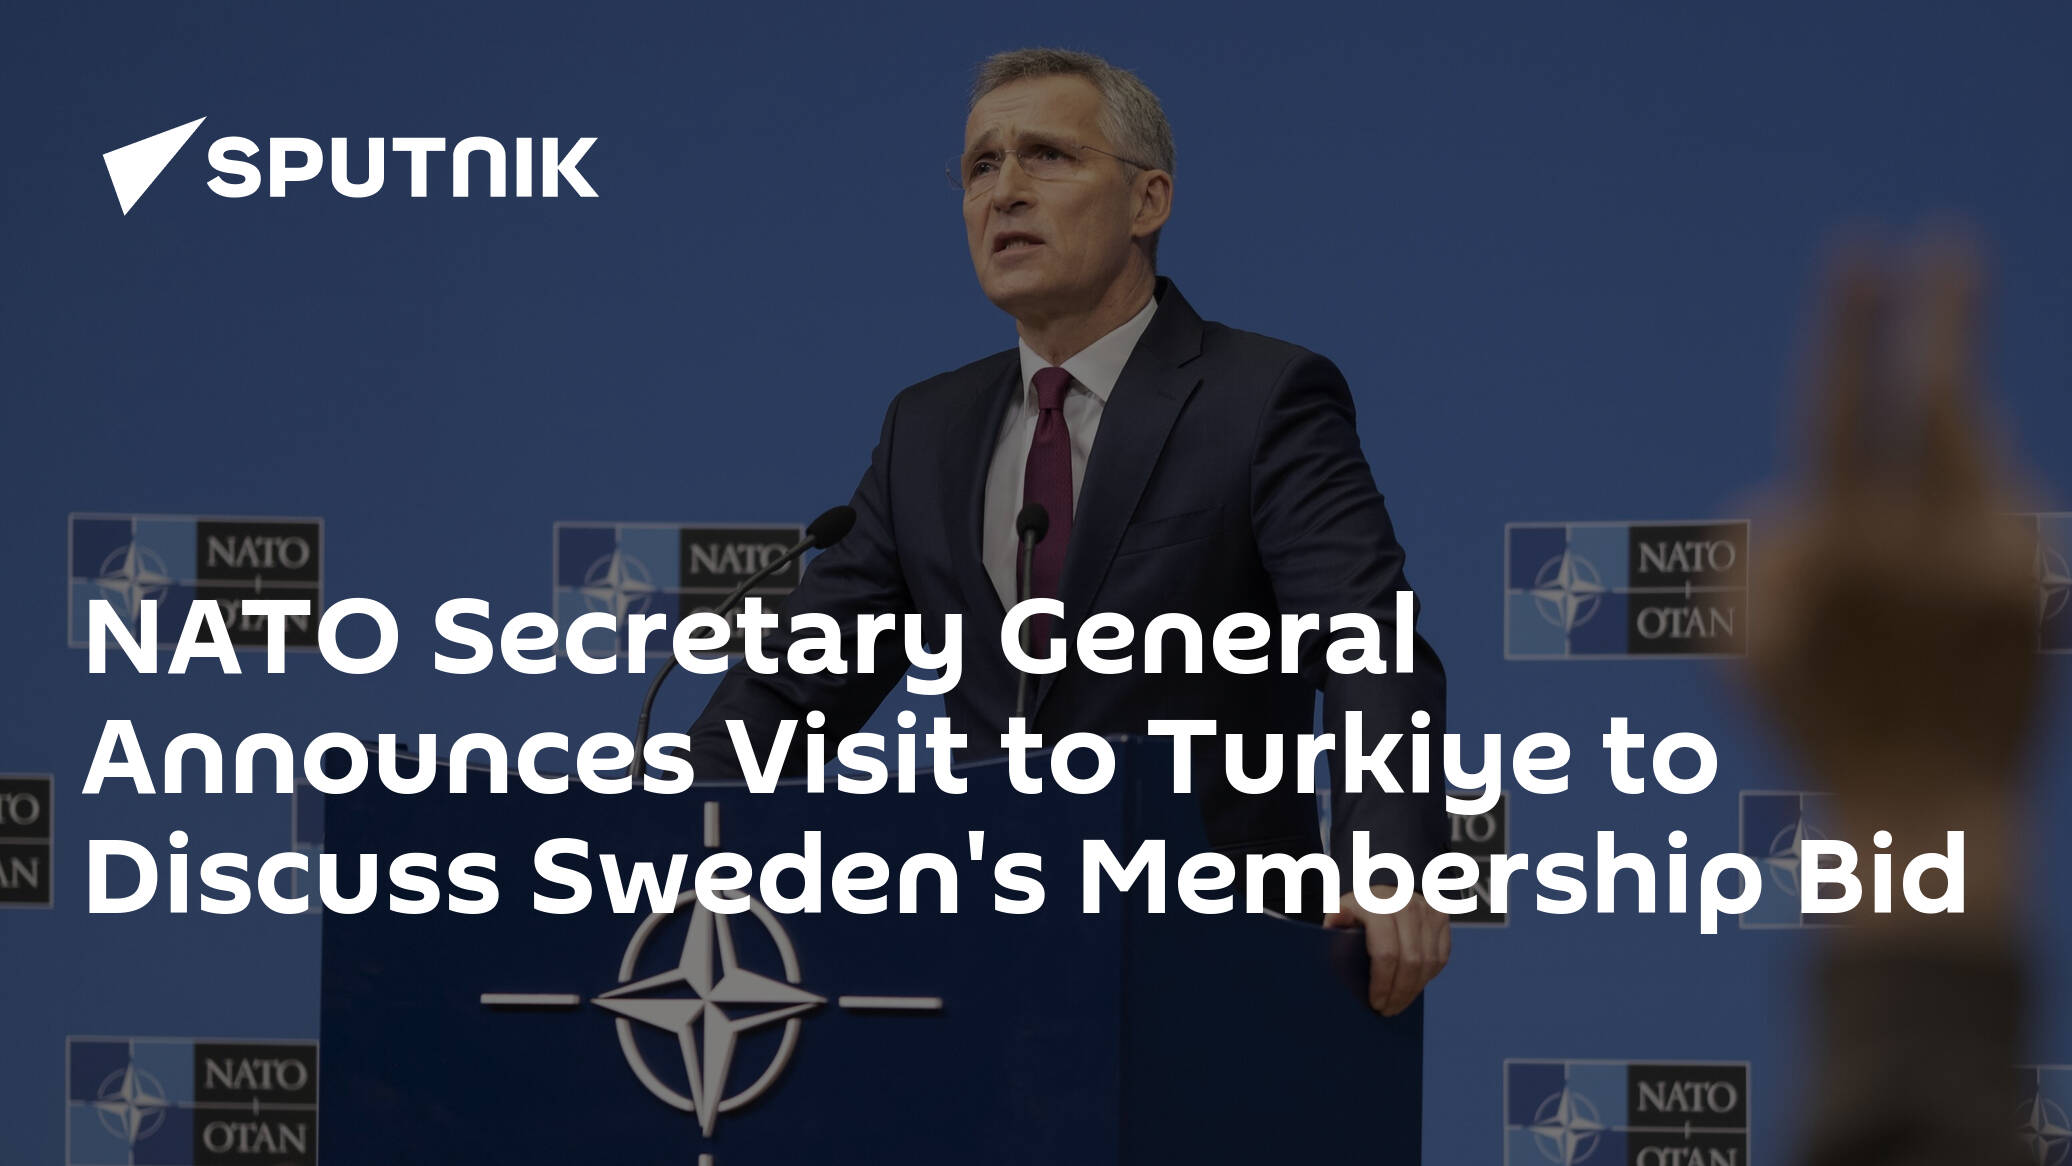 NATO Secretary General Announces Visit to Turkiye to Discuss Sweden's Membership Bid